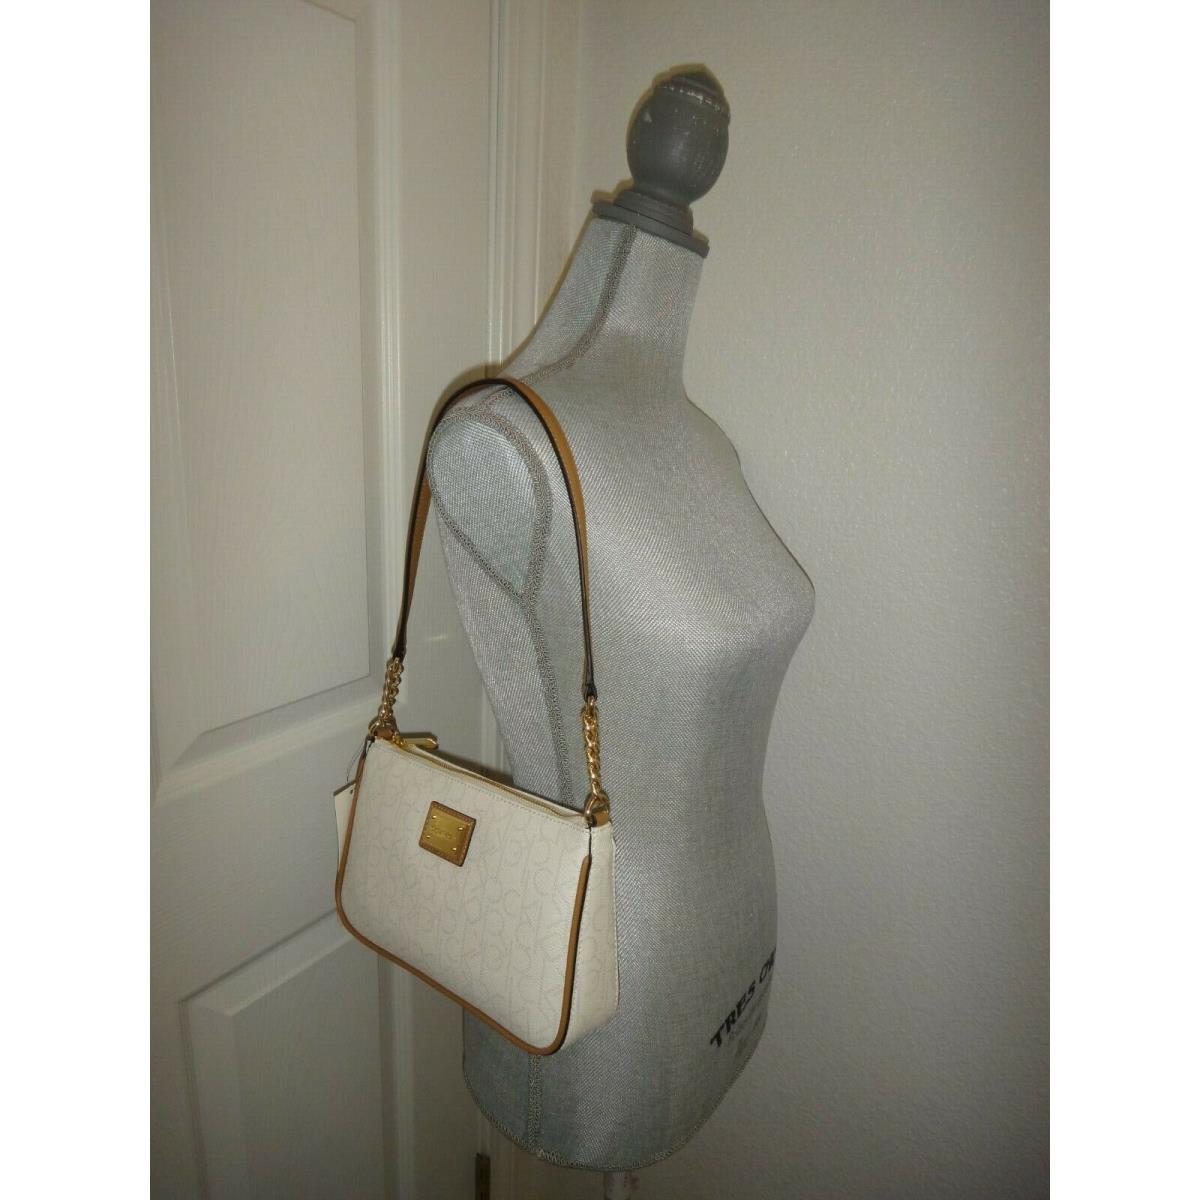 Women's Calvin Klein white and tan shoulder bag | Tan shoulder bag, Calvin  klein bag, Beige purses